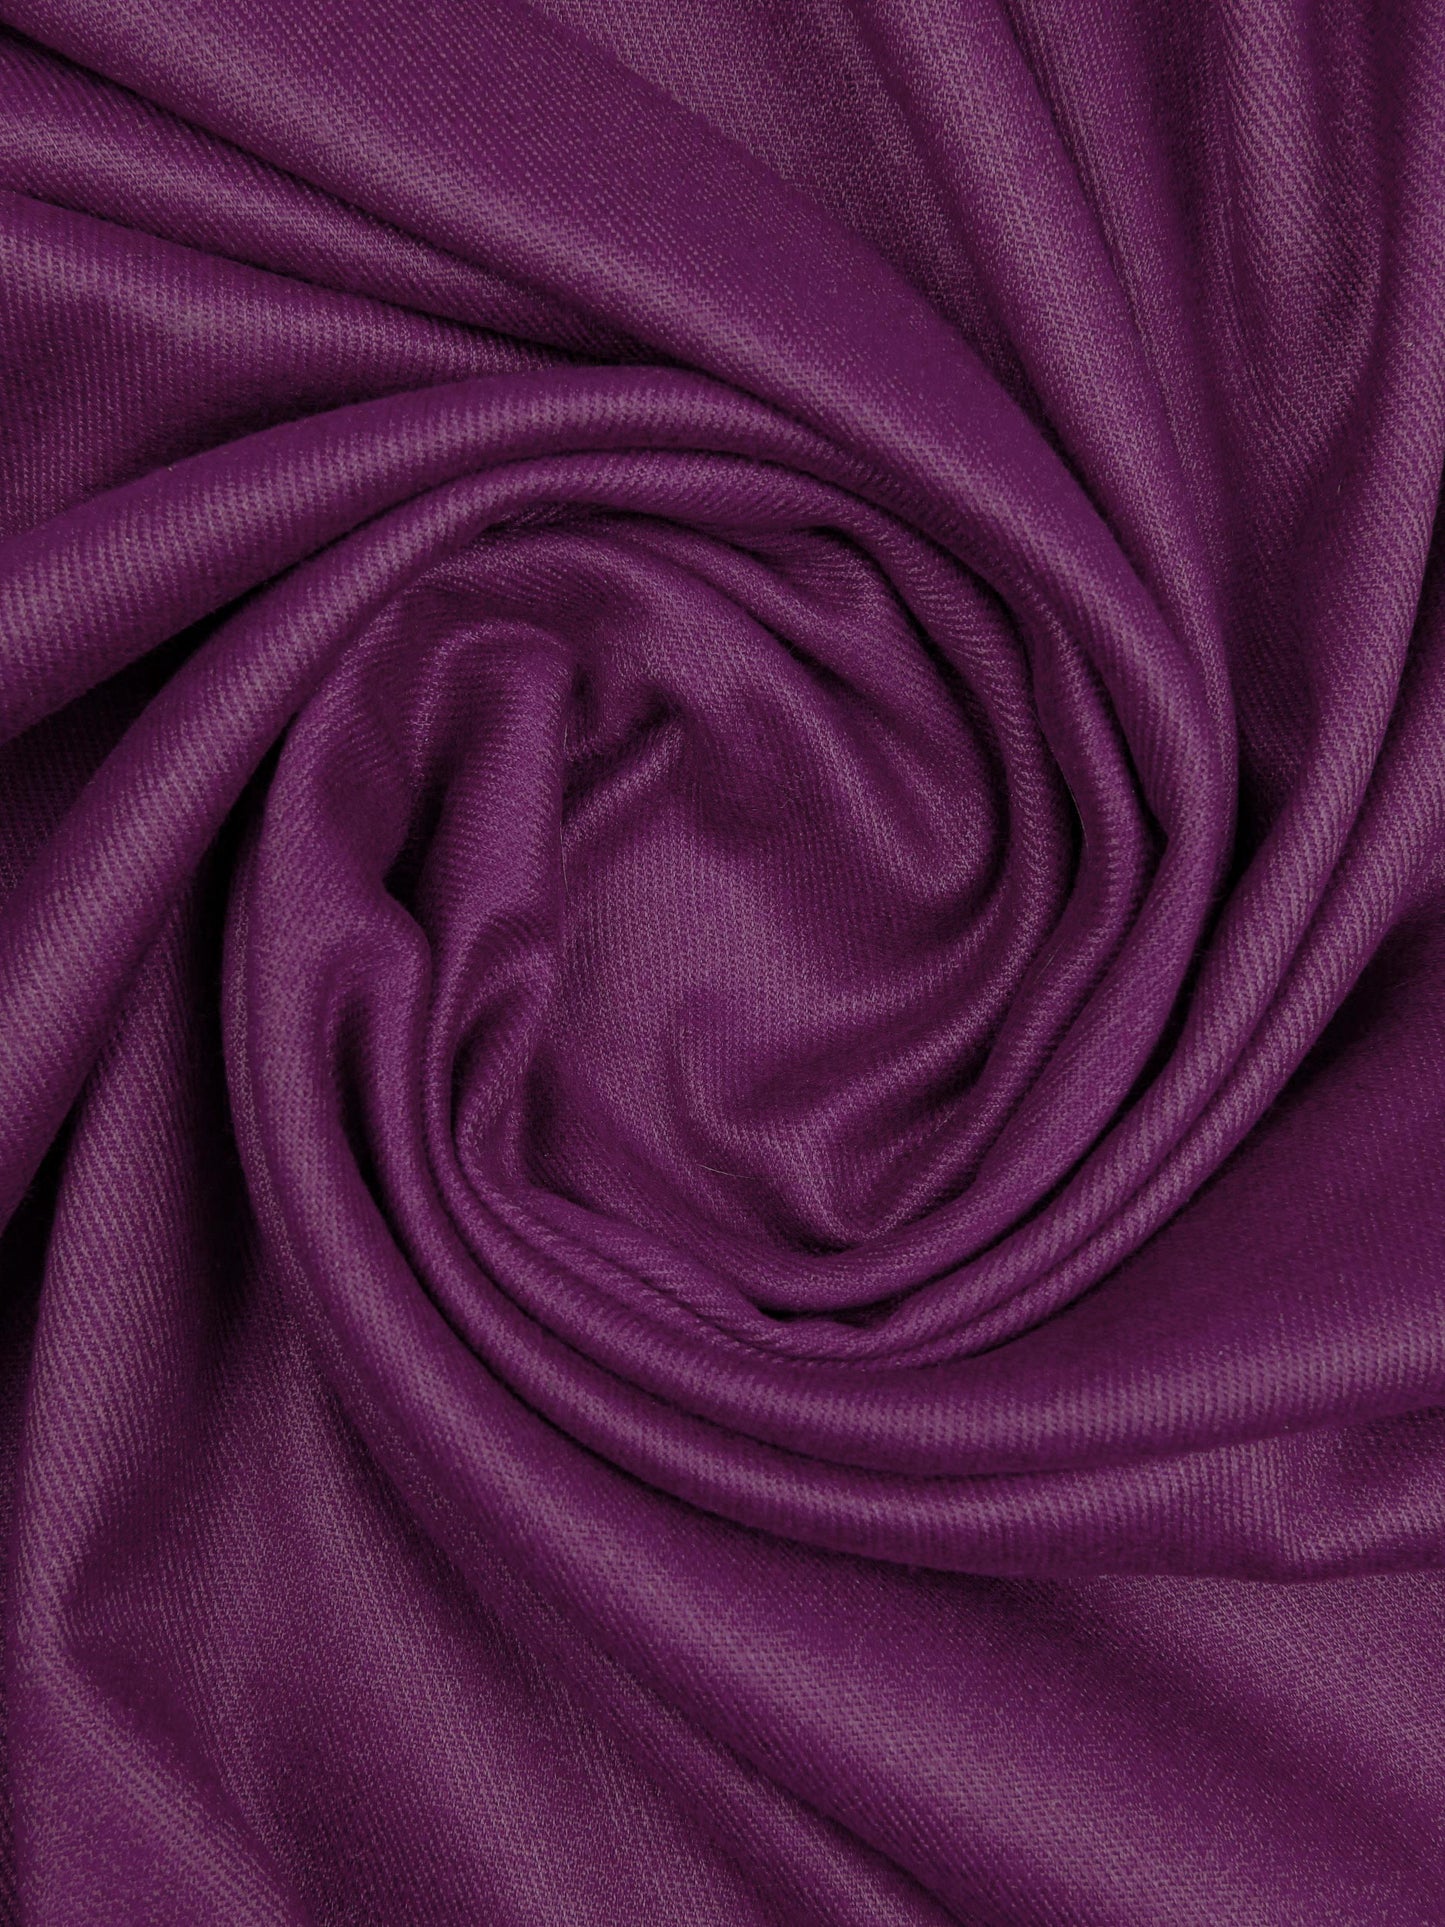 Dyed Woolen Shawl